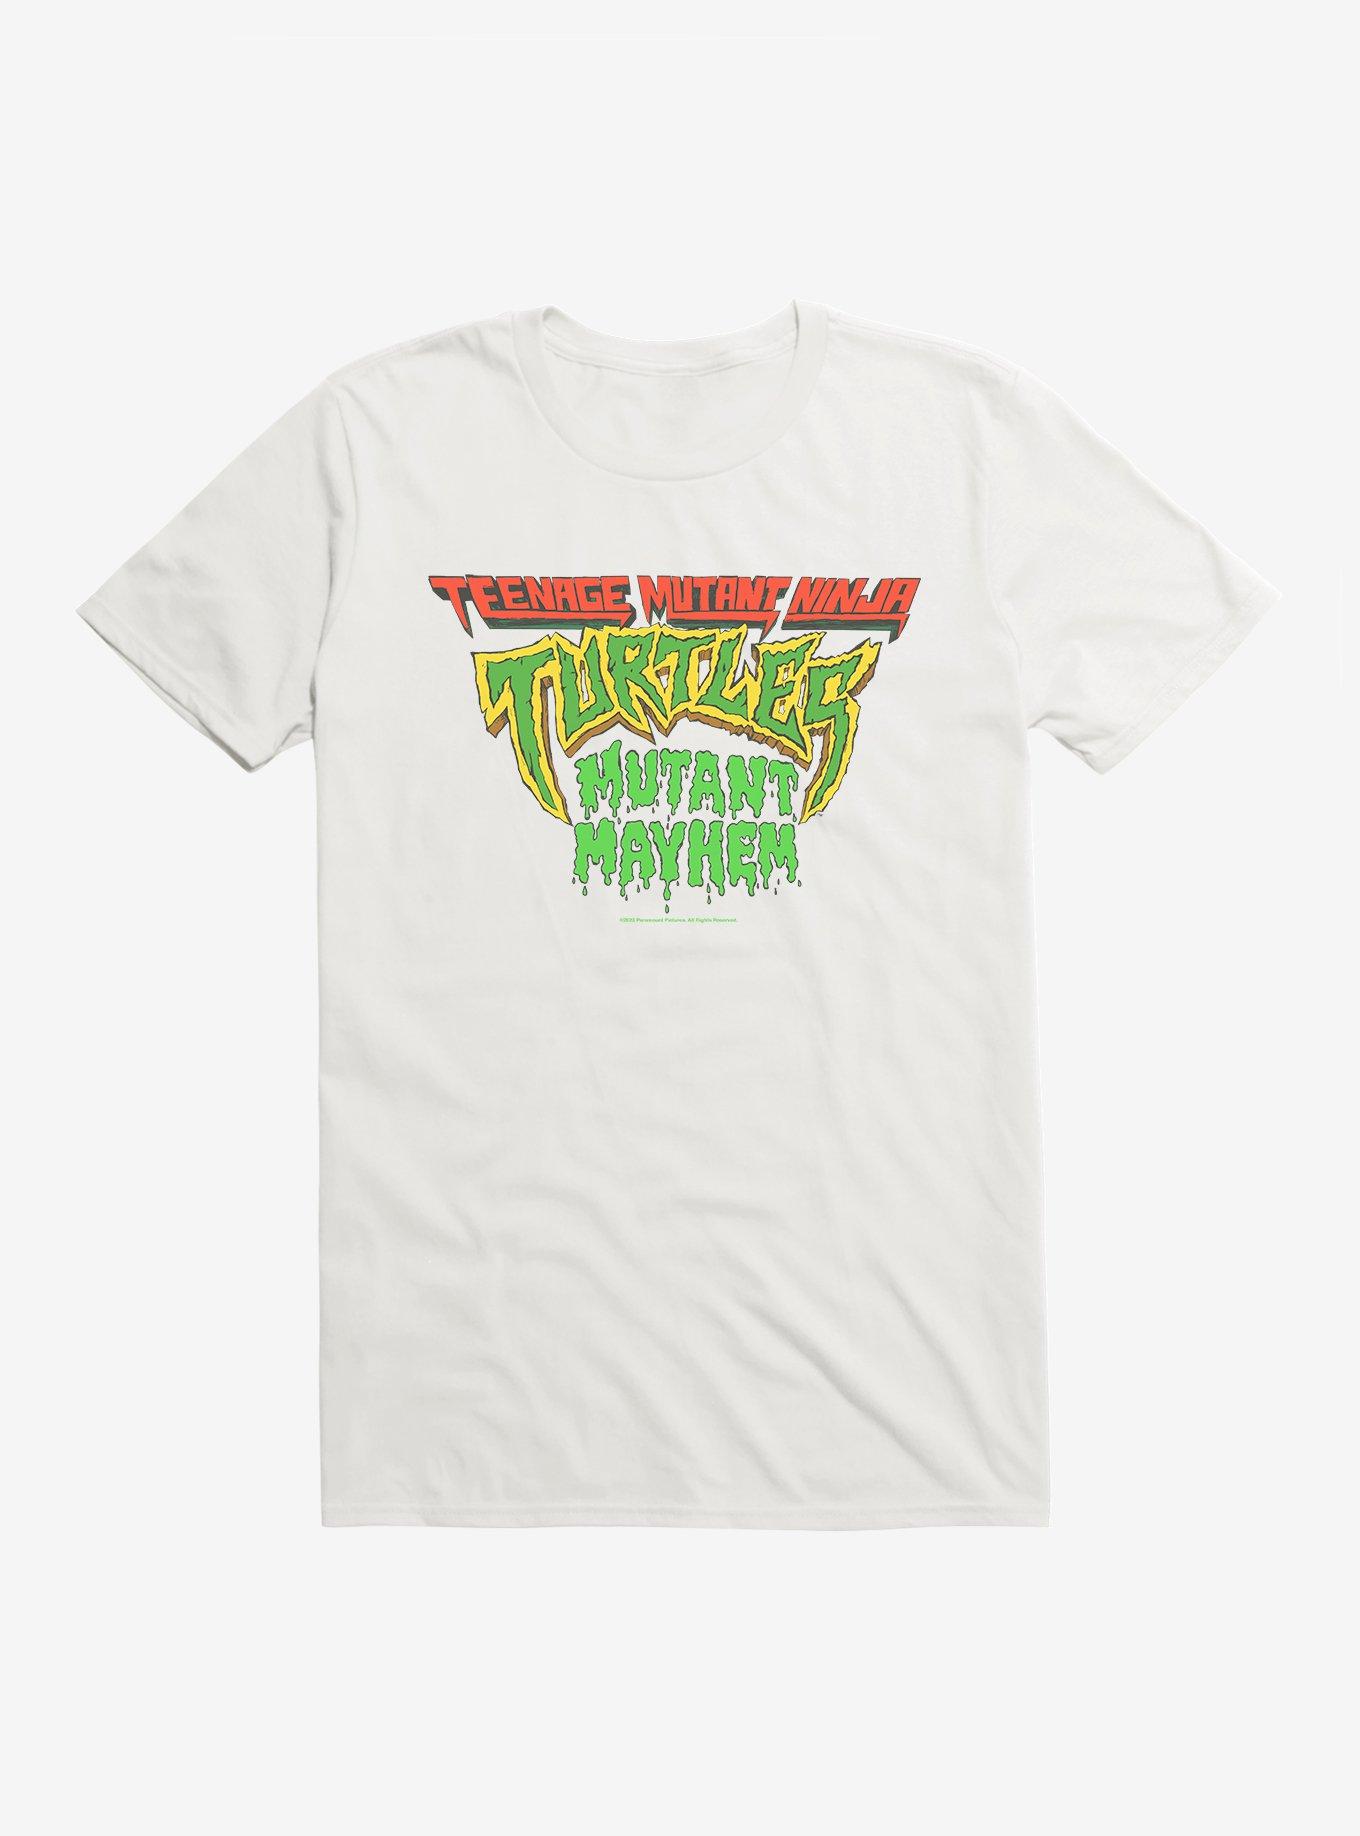 Teenage Mutant Ninja Turtles Cartoon T-shirt Clothing Children's Summer  Tops Cotton Comfortable Short-sleeved Anime